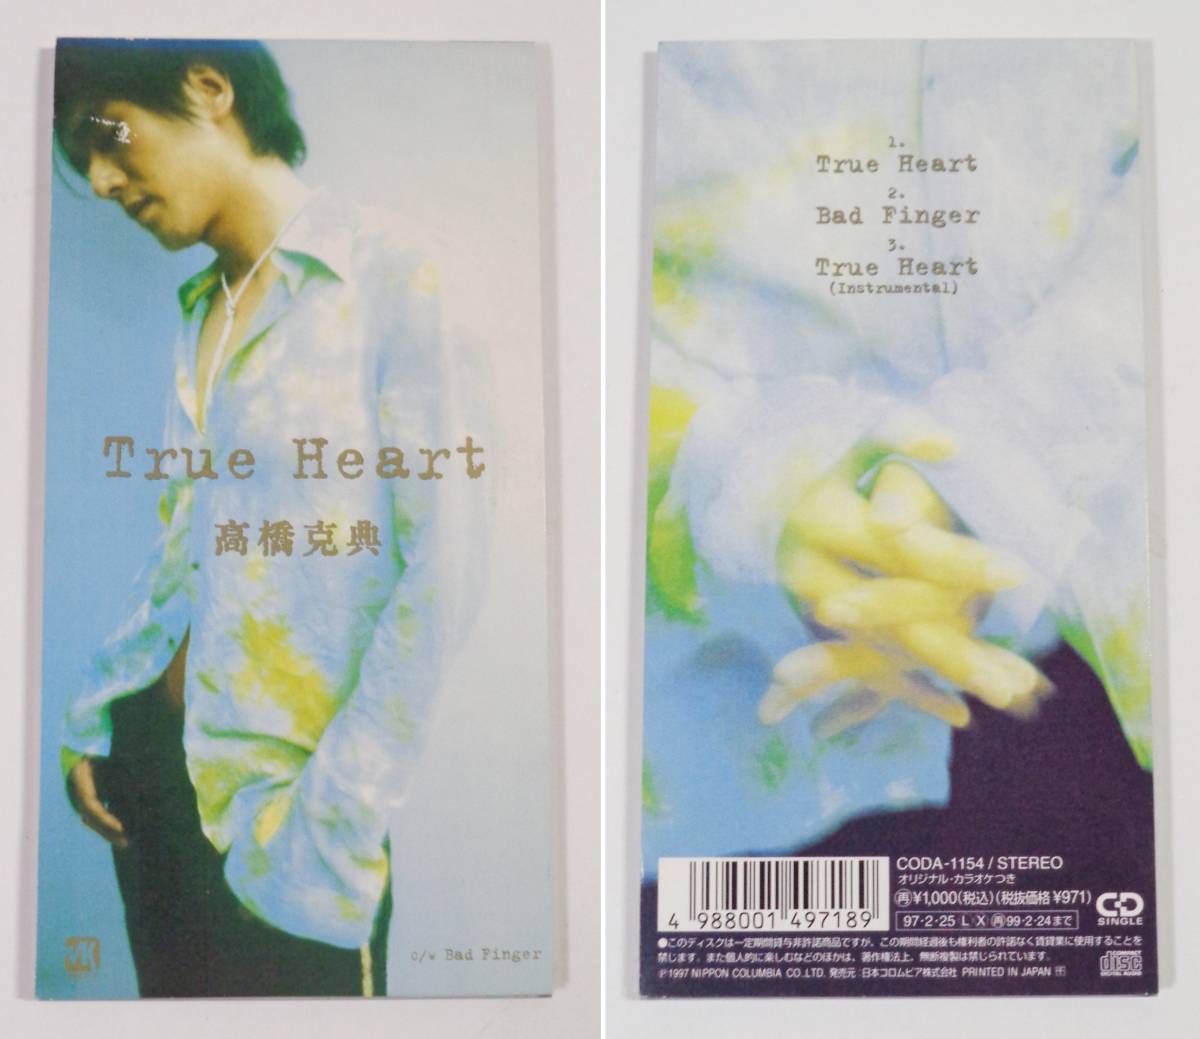 8cmCD Takahashi Katsunori 8 kind set 